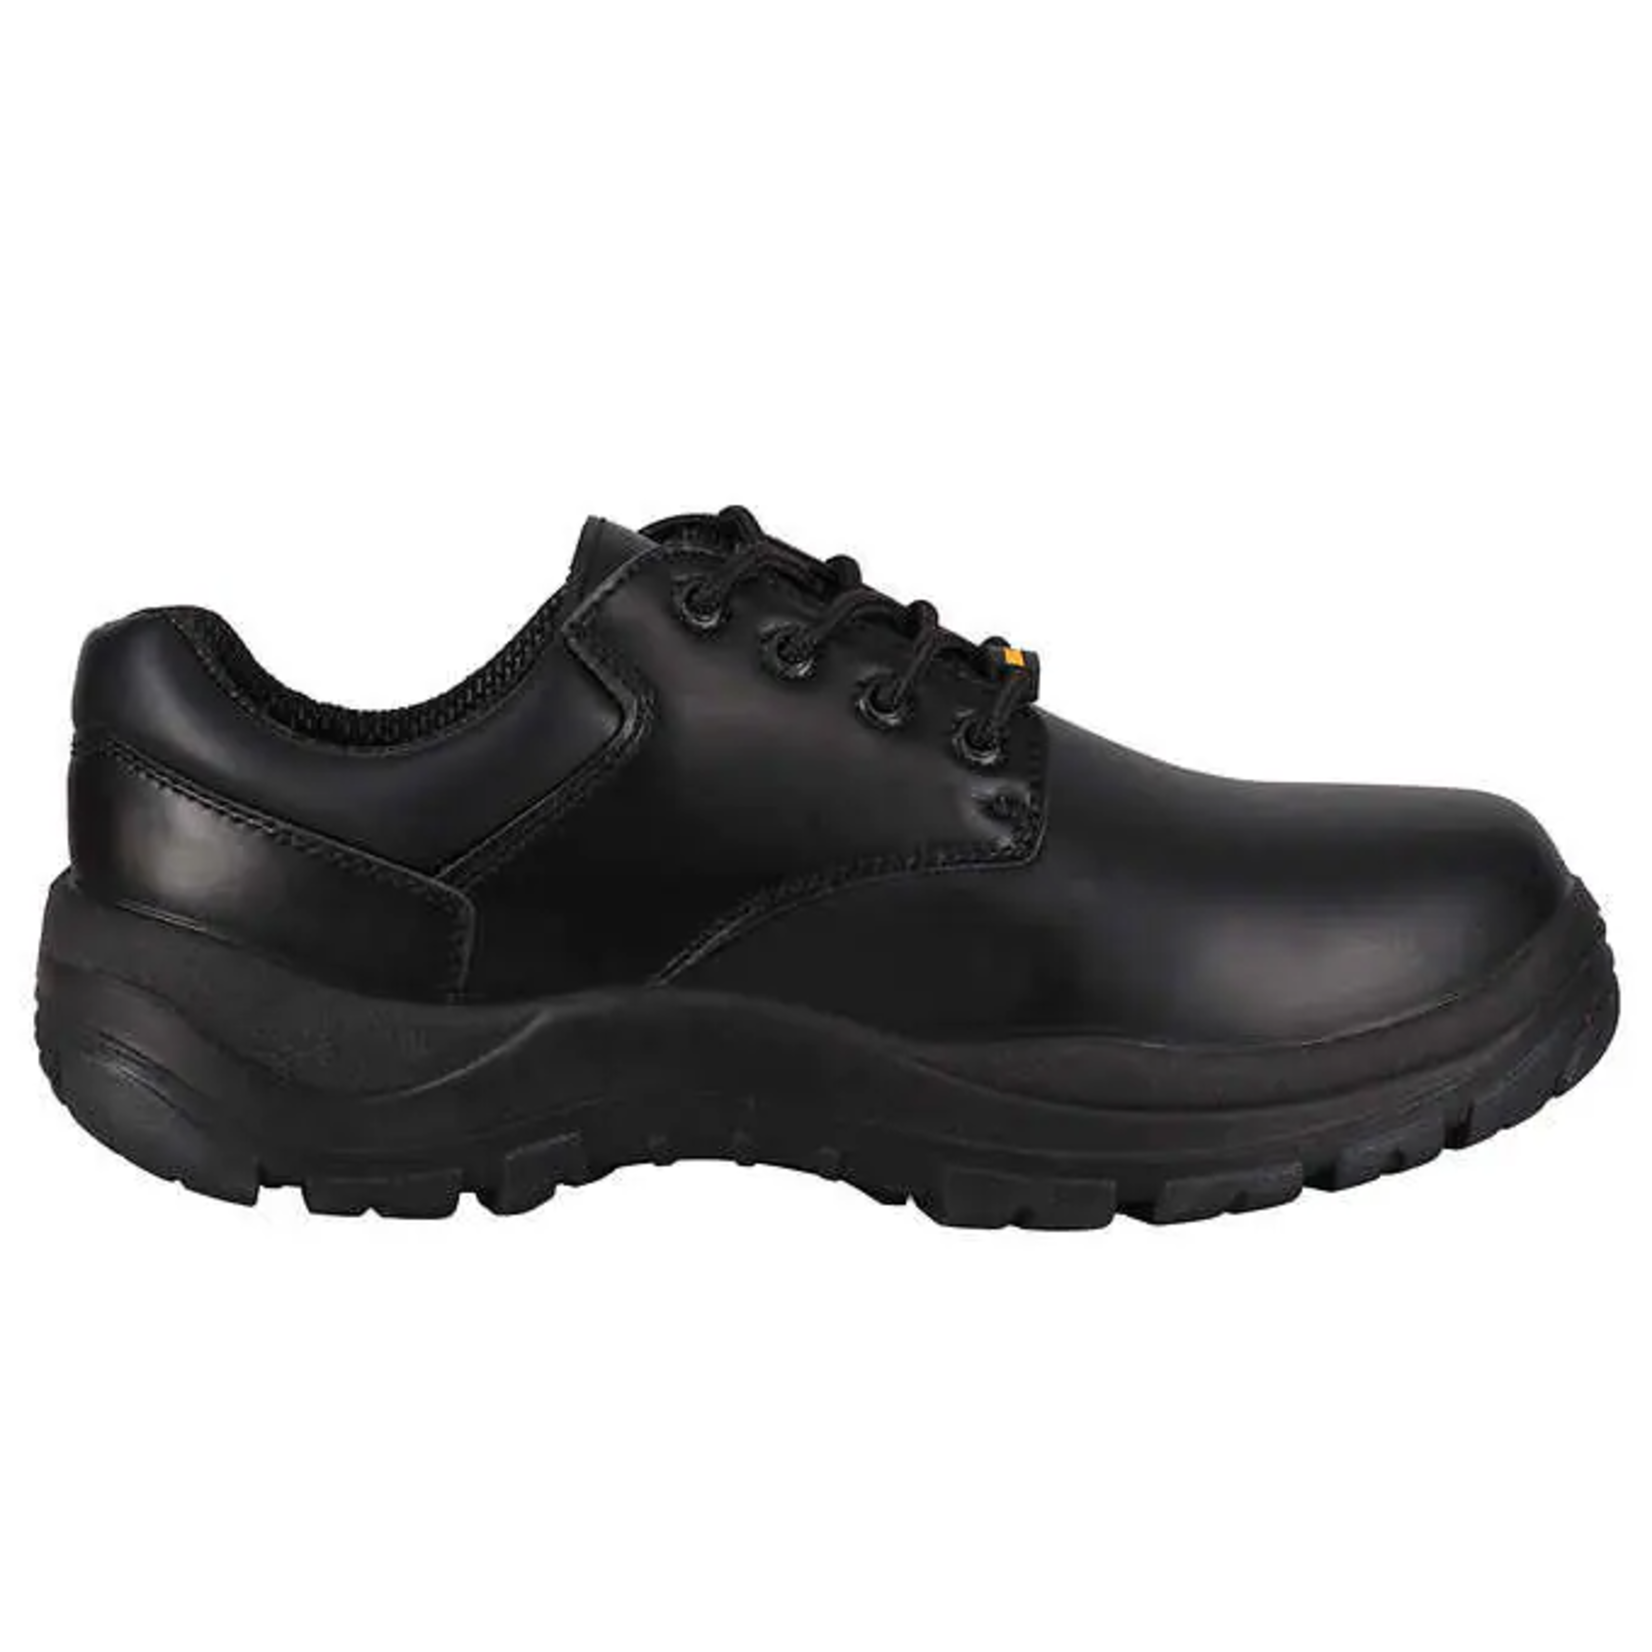 Prospector Pro Men's Leather Safety Shoes Size 10 3E